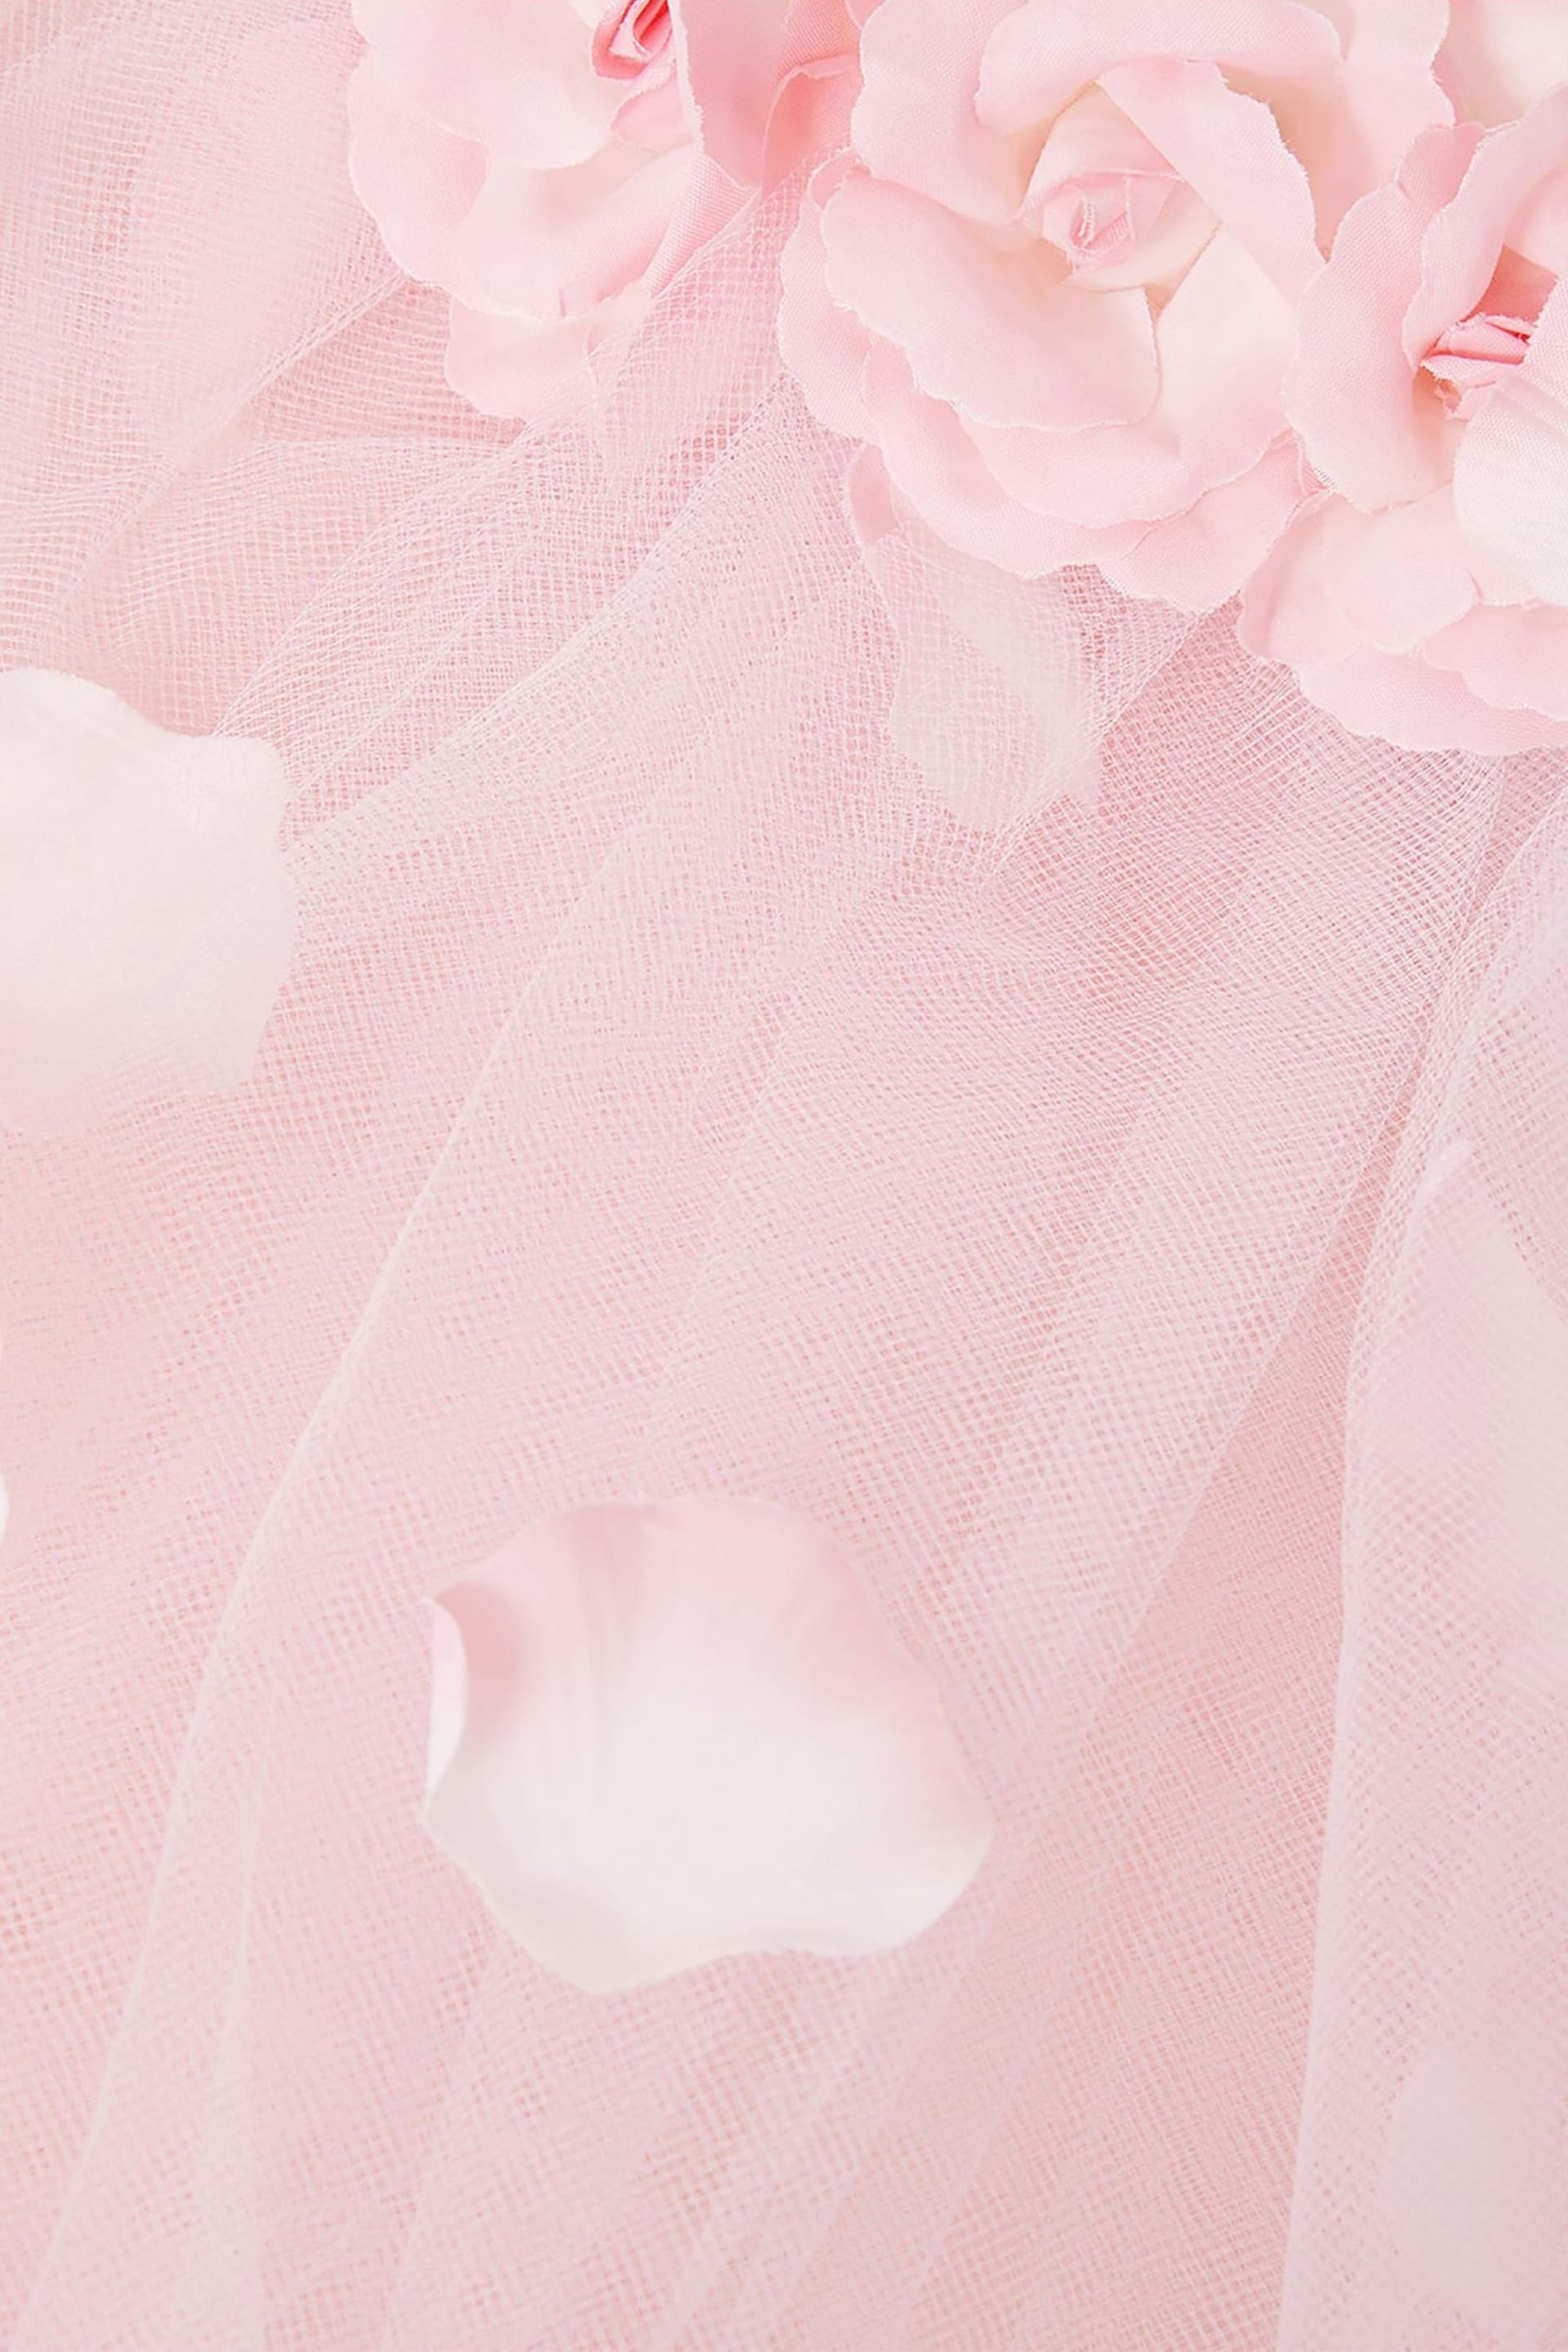 Monsoon Pink Boutique Dress-Up Tutu - Image 2 of 2